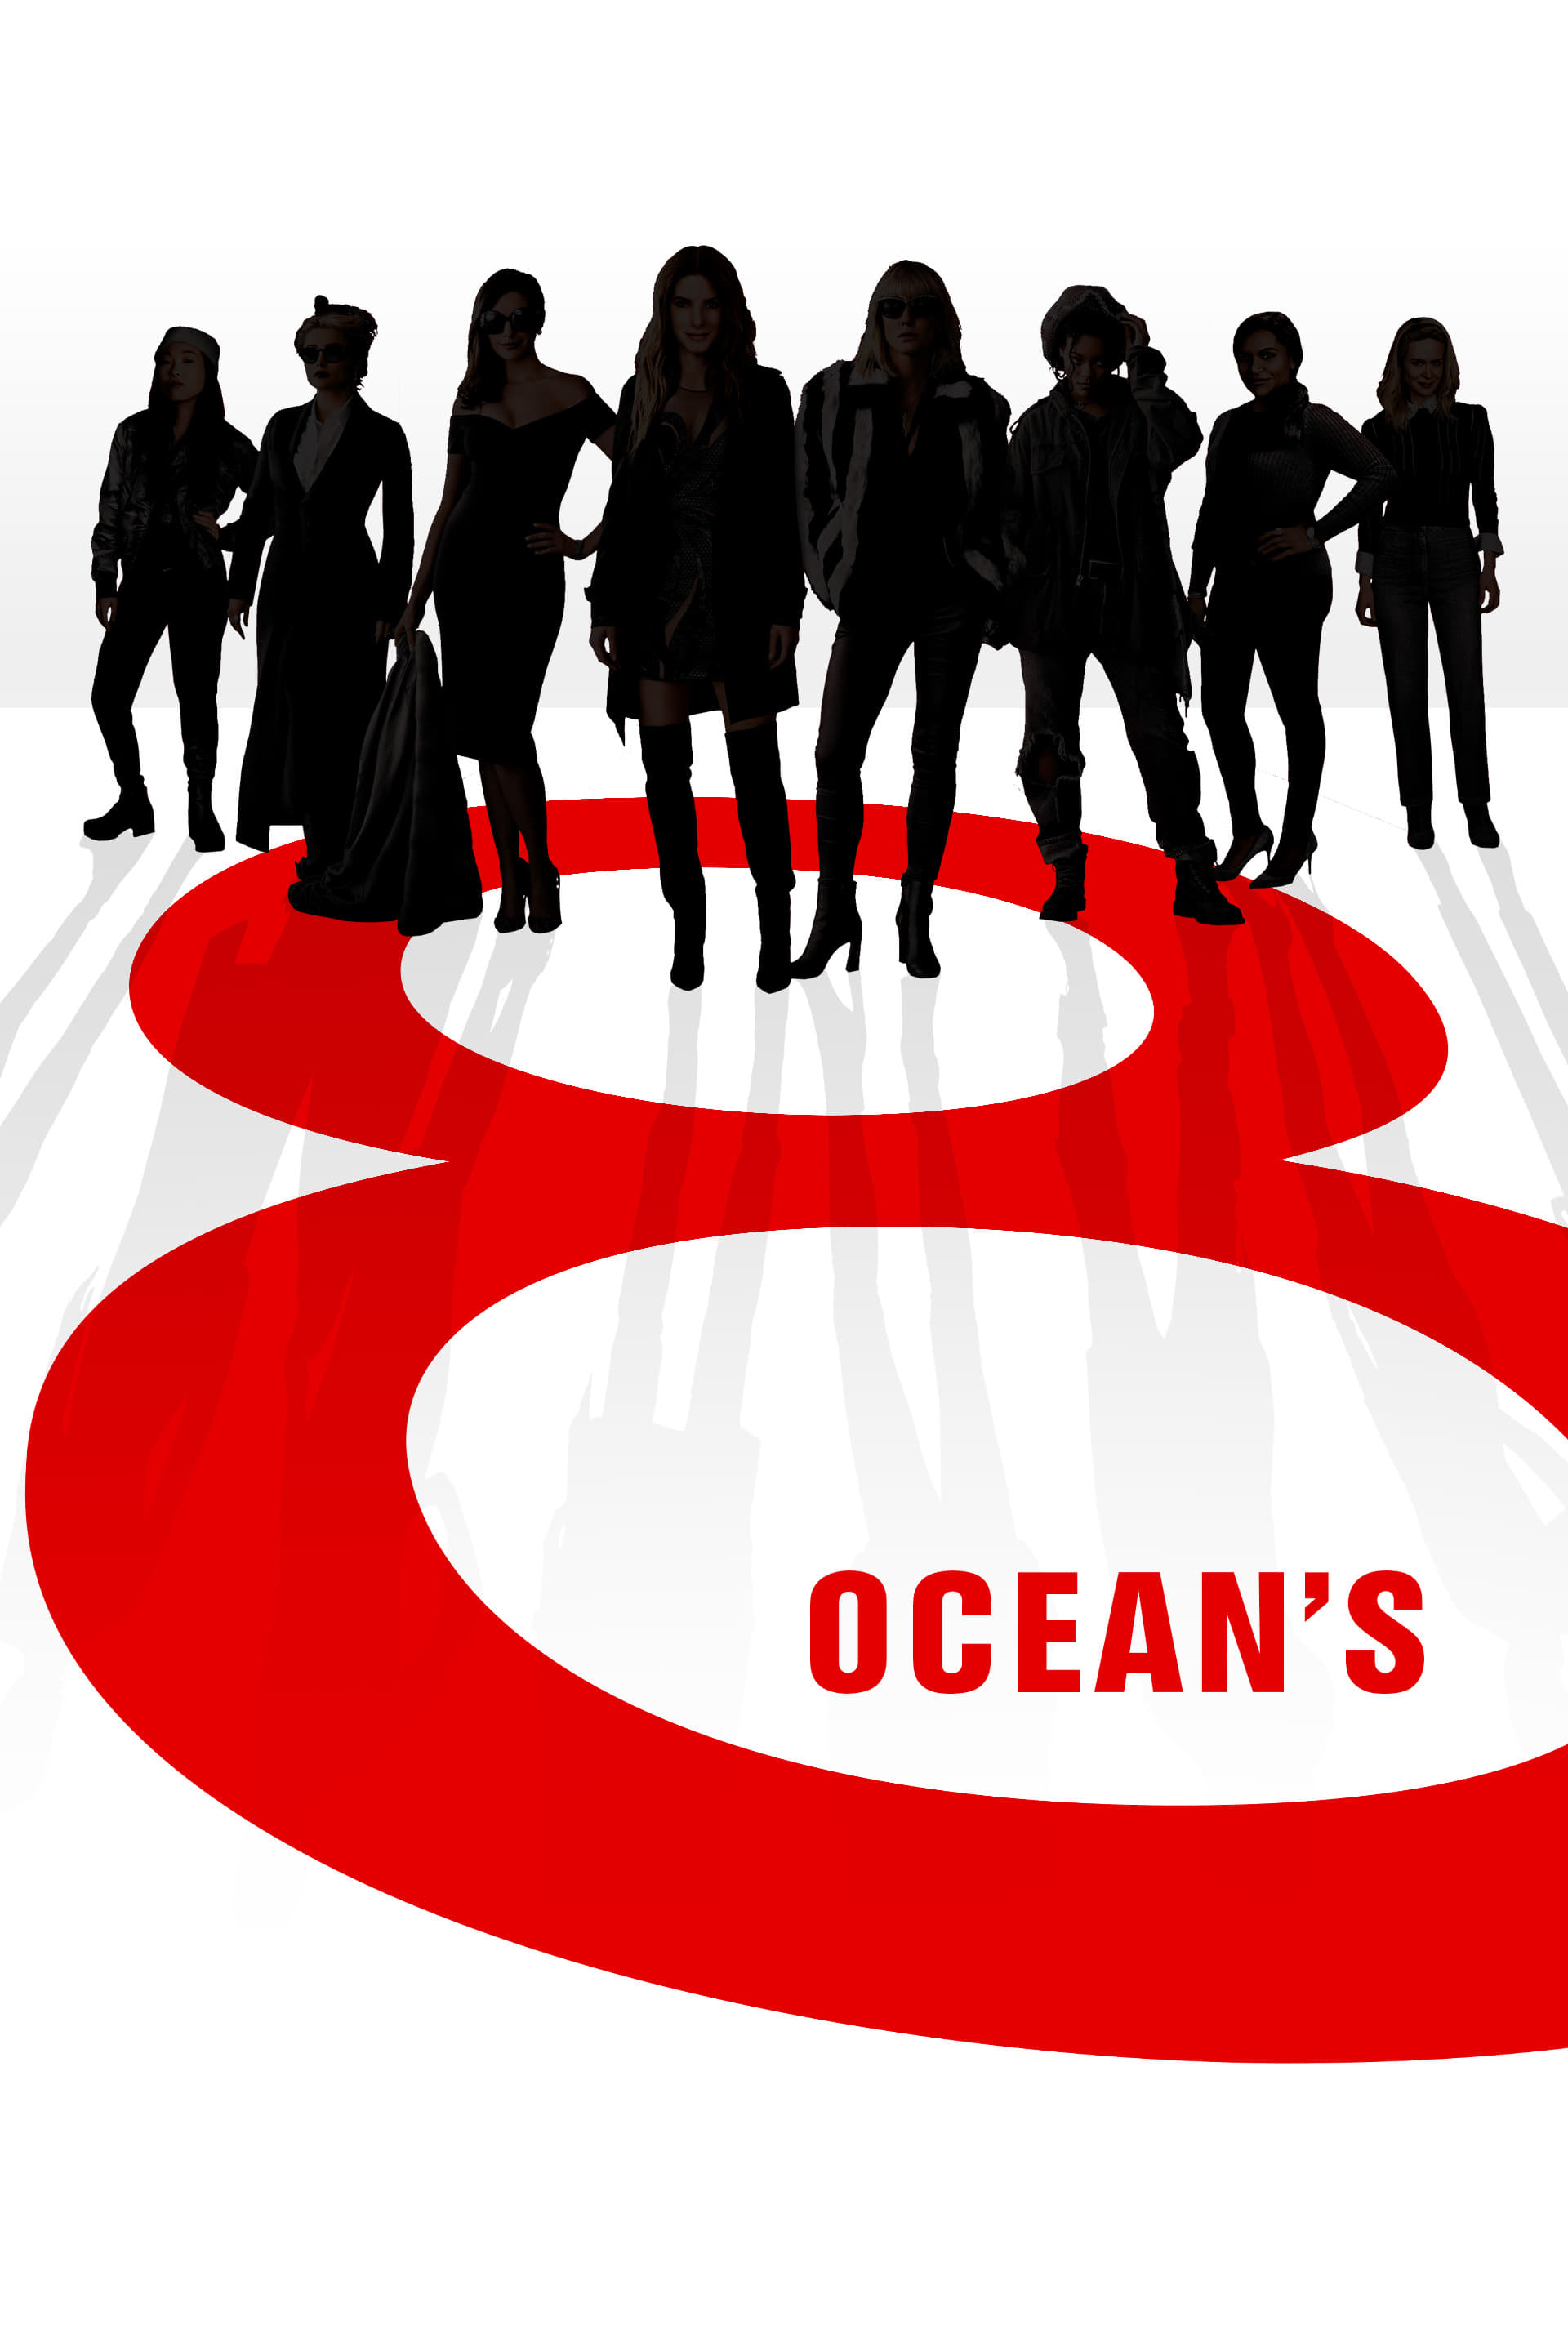 Ocean's Eight Movie poster